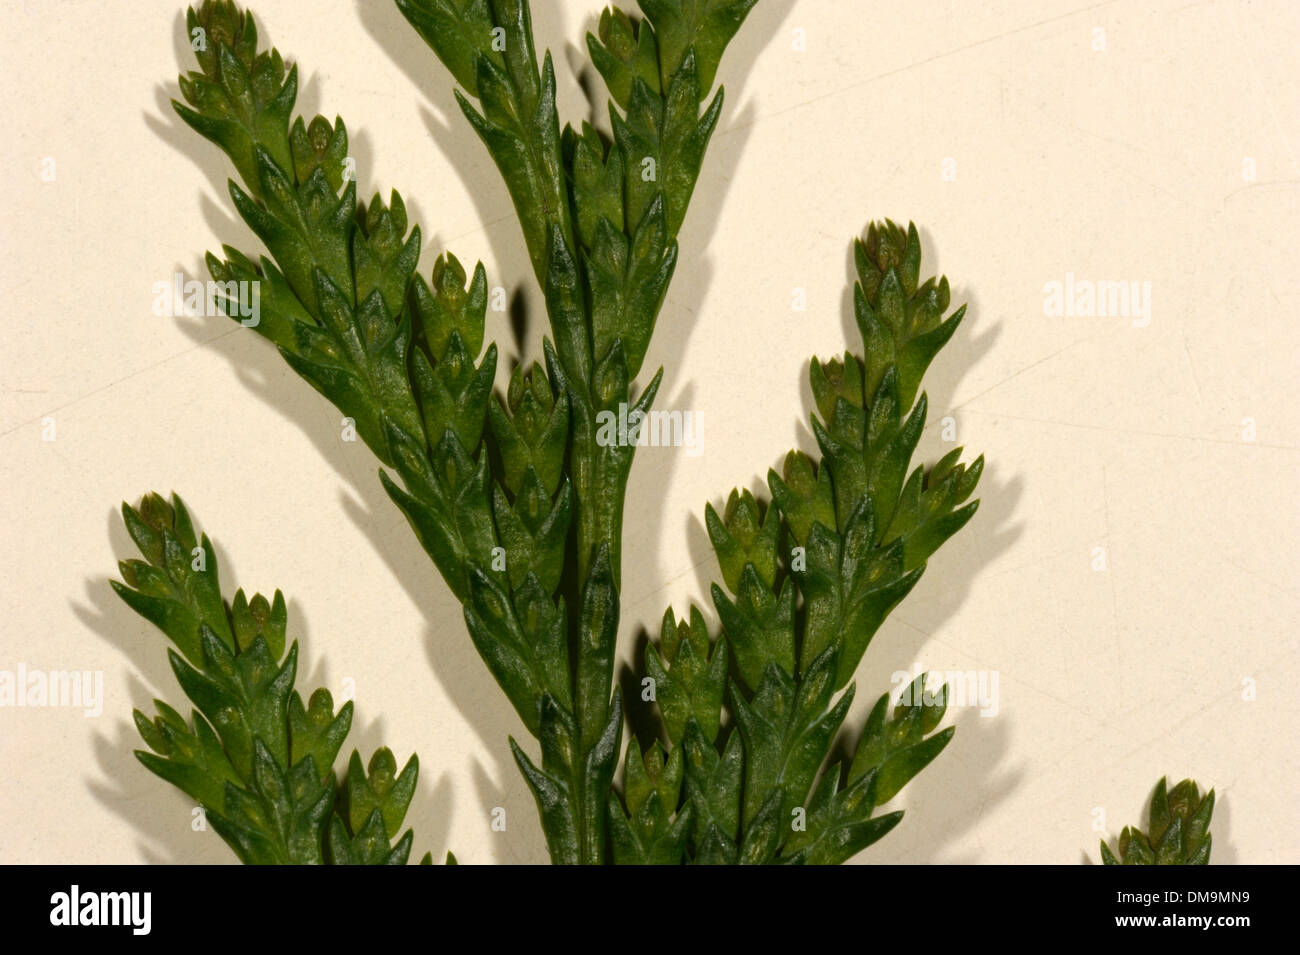 Lawson's Cypress, Chamaecyparis lawsoniana Leaves Stock Photo